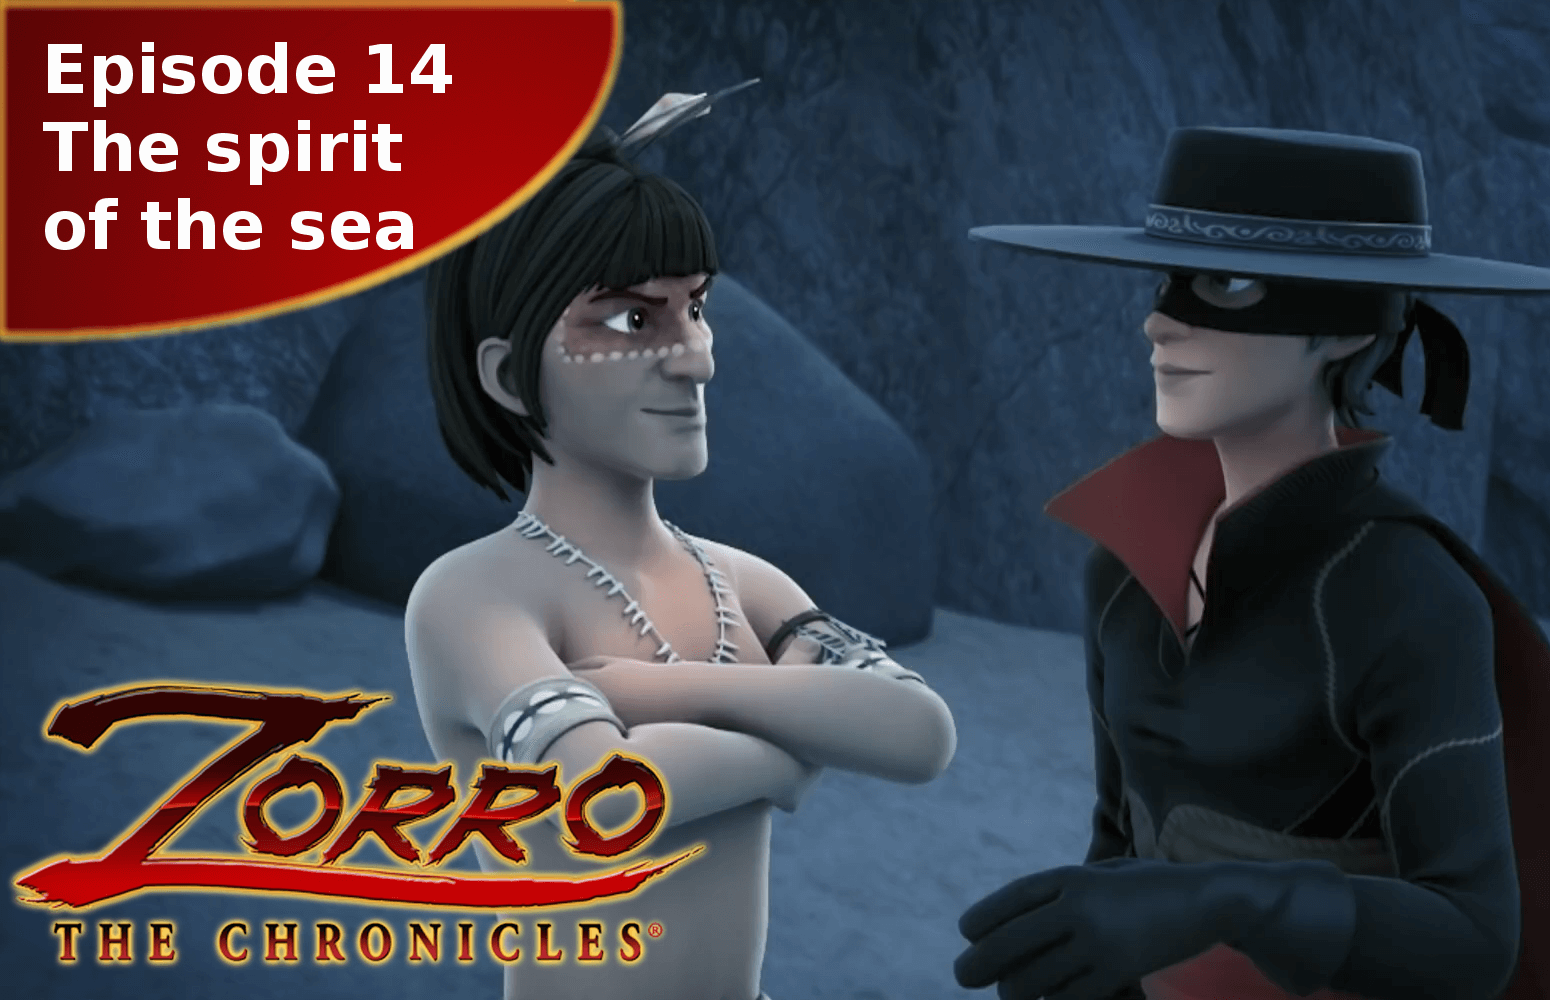 Zorro the Chronicles episode 14 The spirit of the sea